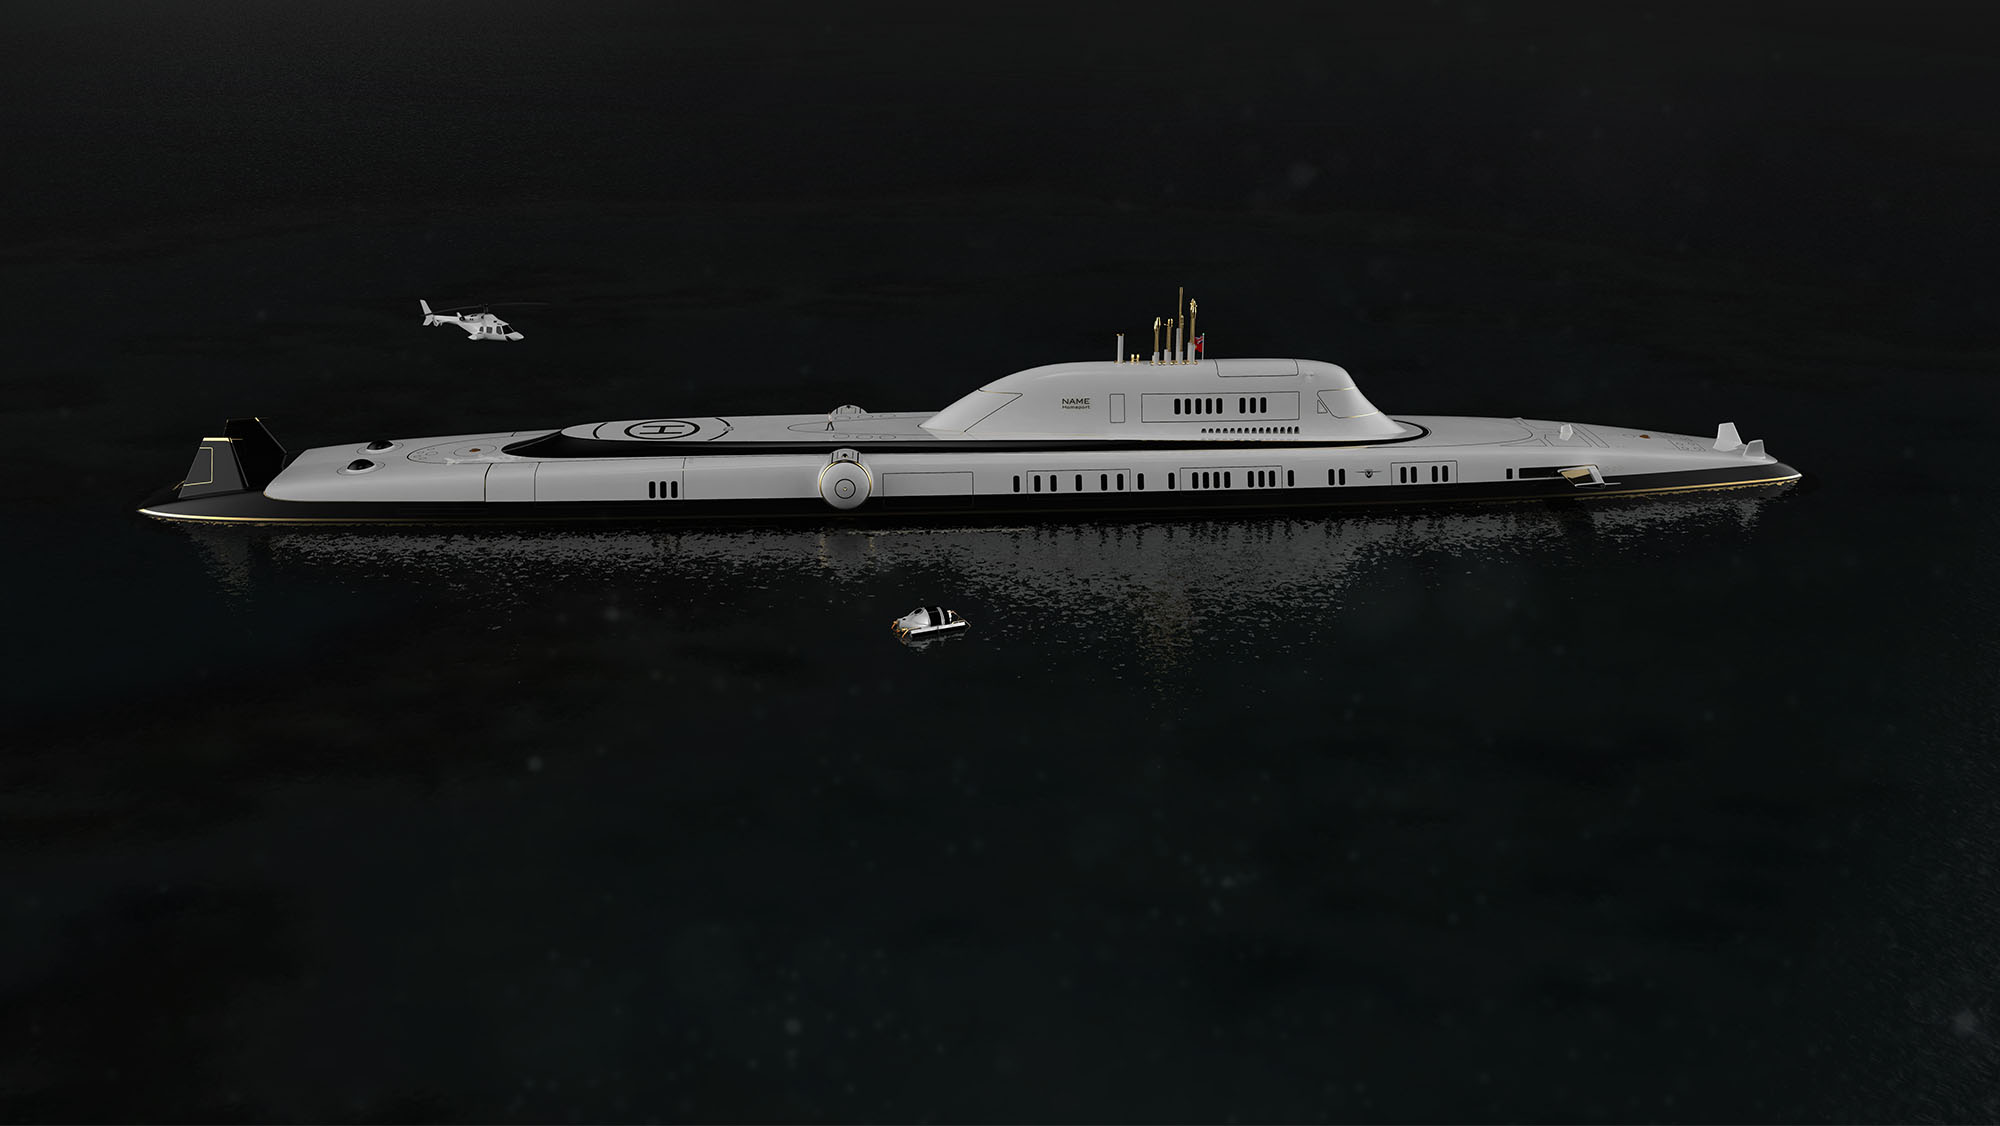 migaloo submarine superyacht